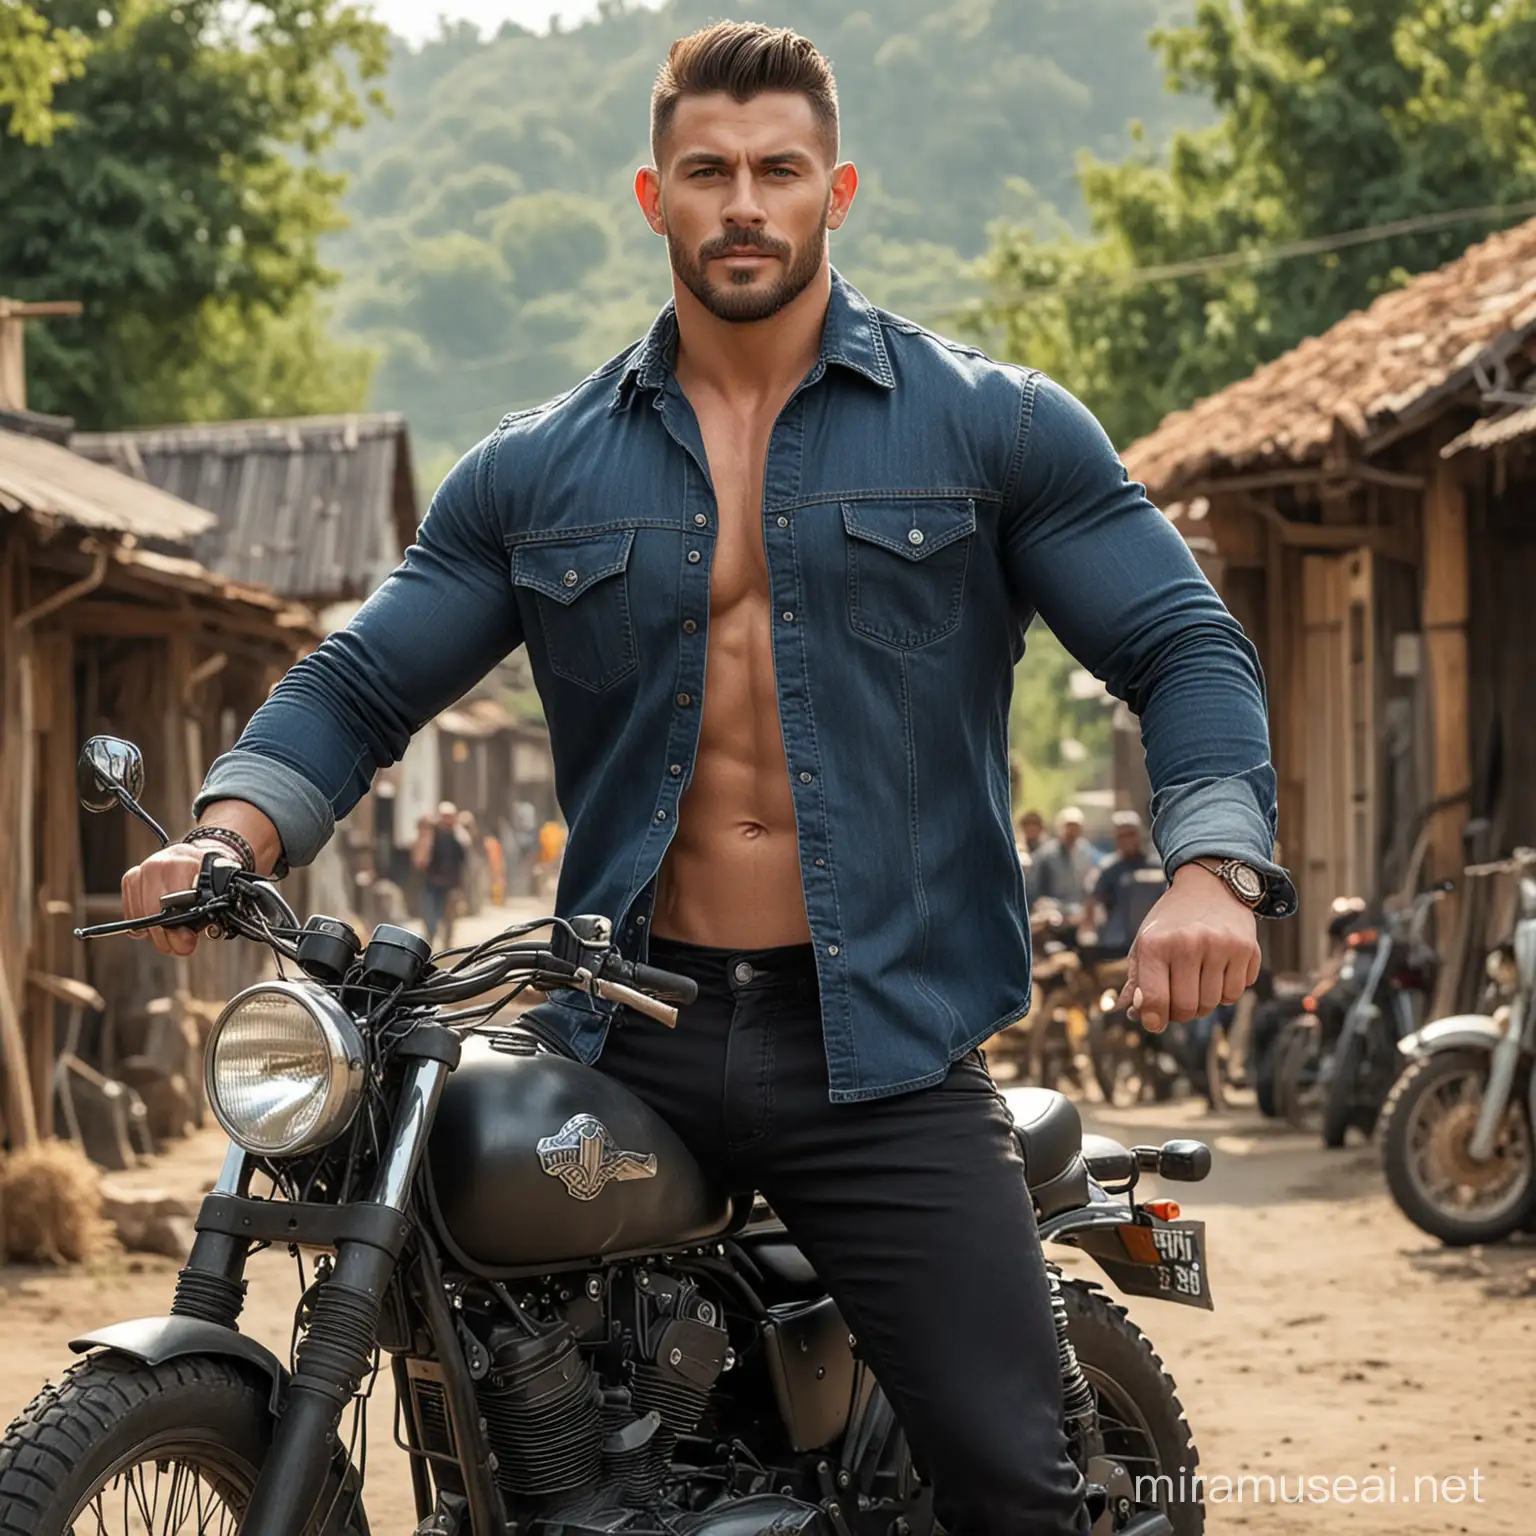 Muscular Men in Black Denim Shirts Riding Heavy Motorbikes Through a Village